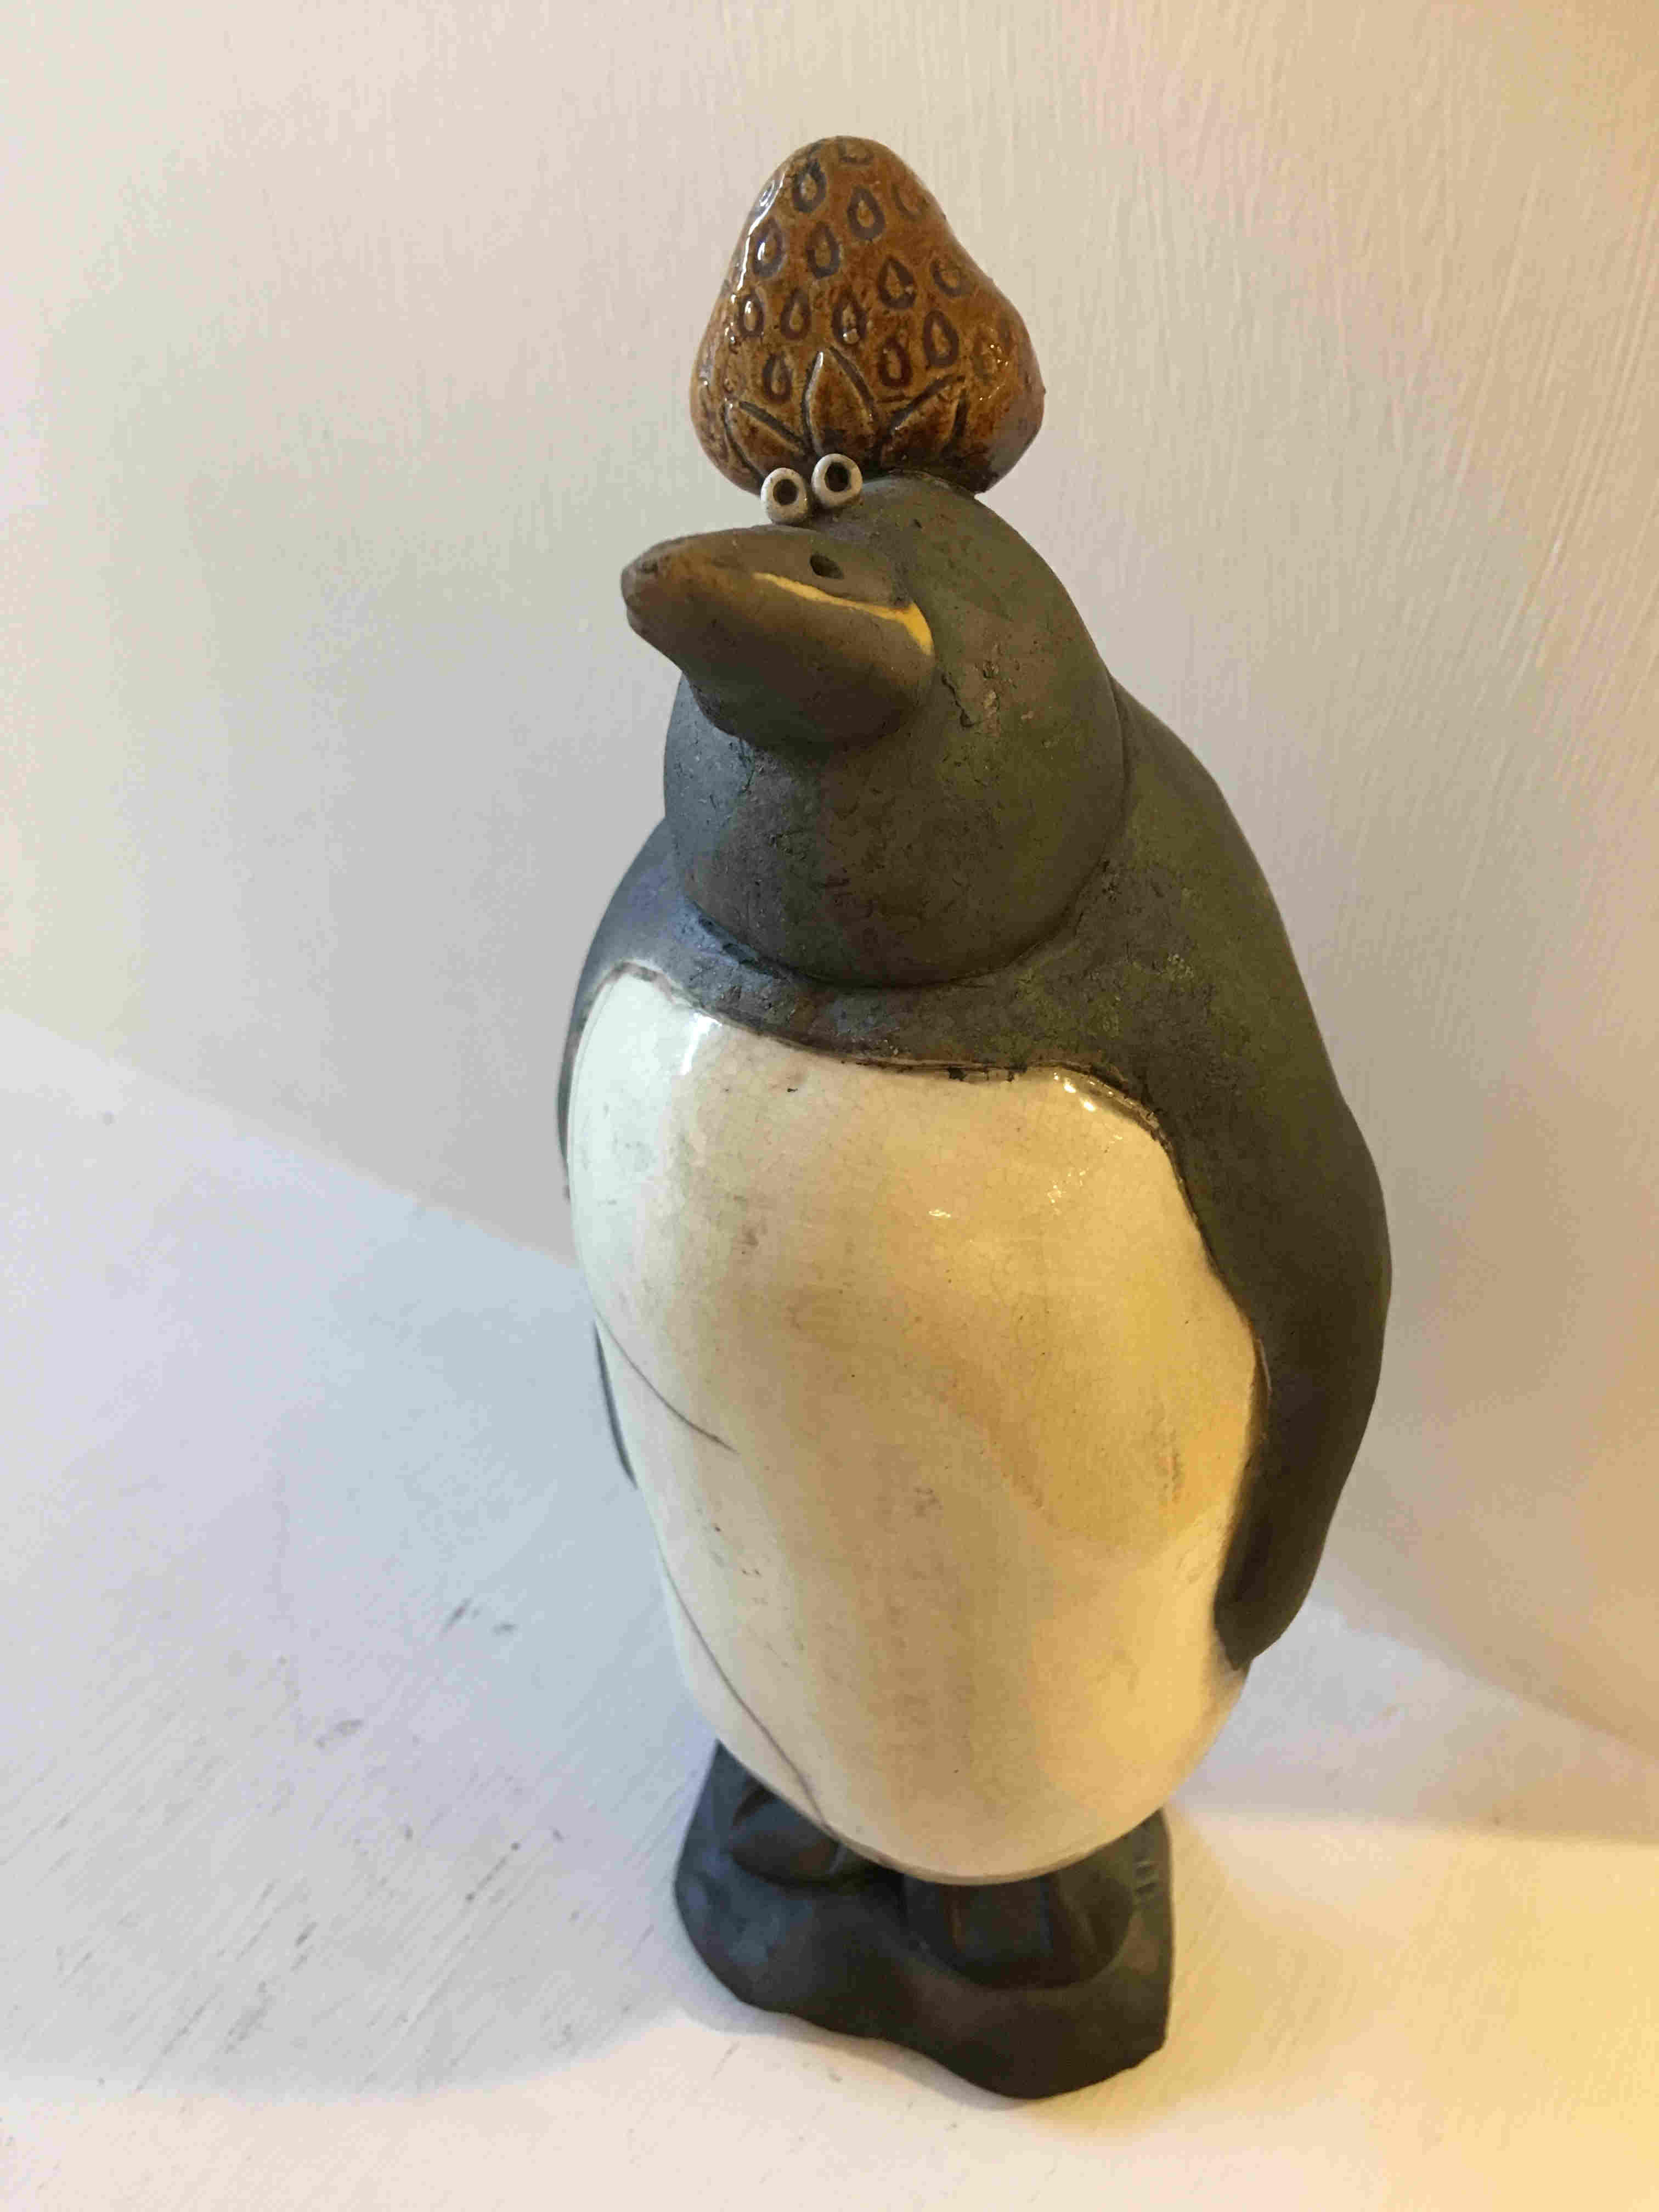 'Penguin with a Soft Centre' by artist Alex Johannsen